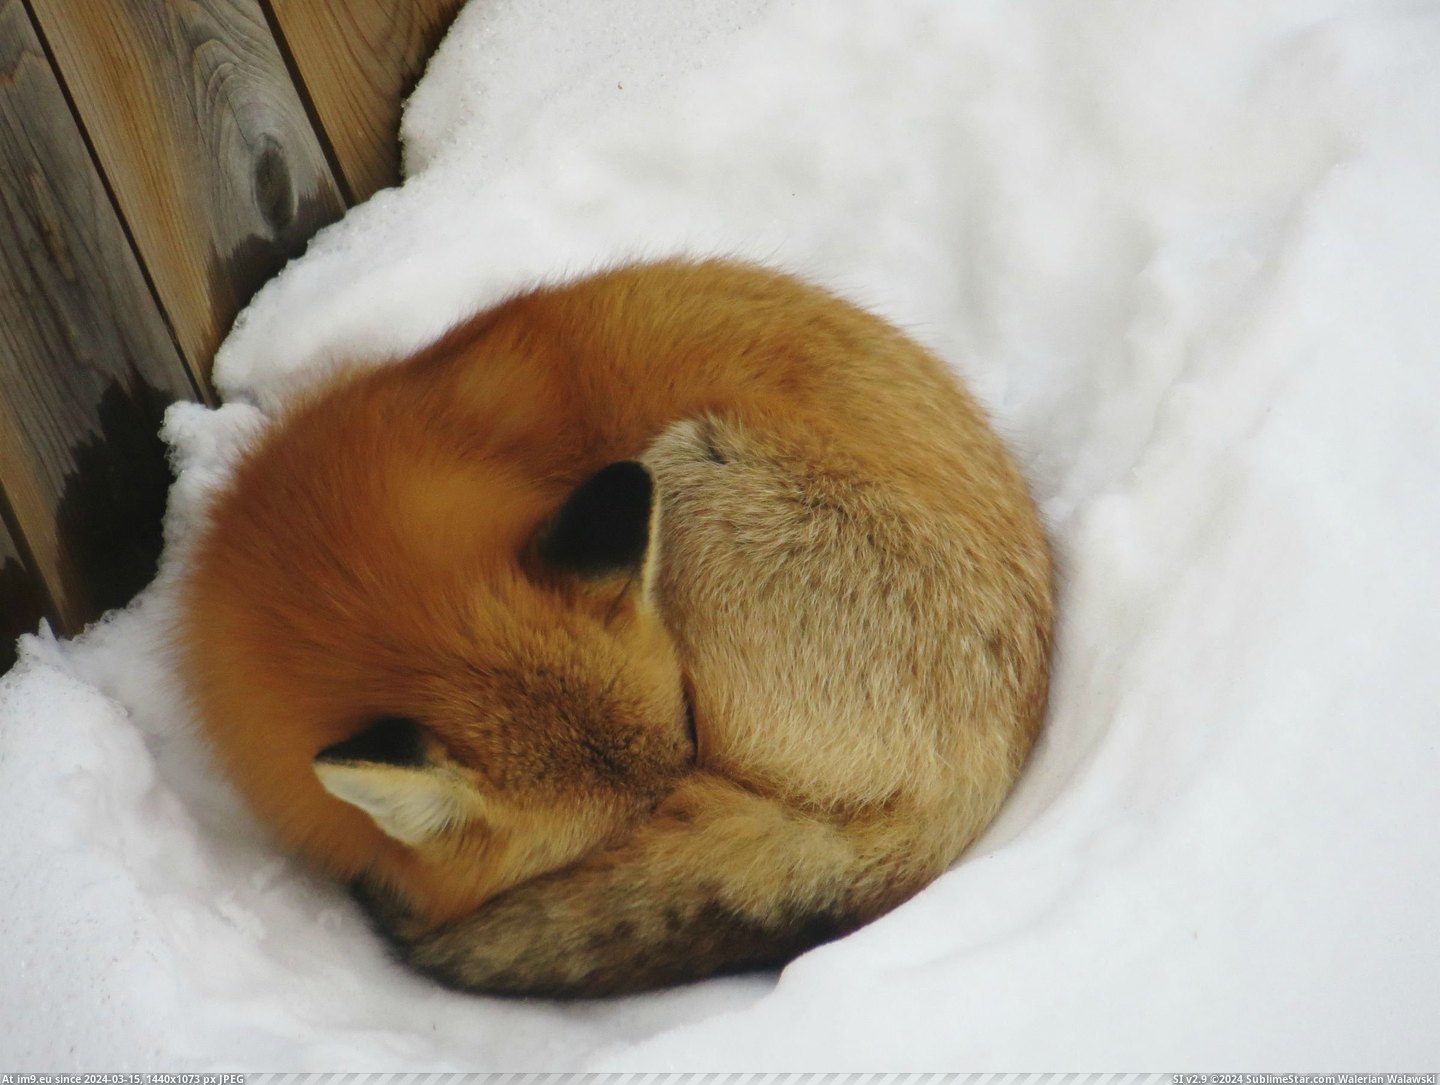 #Red #Canada #Alberta #Backyard #Fox #Sleeping [Pics] Red fox sleeping in my backyard! Alberta, Canada. 2 Pic. (Image of album My r/PICS favs))